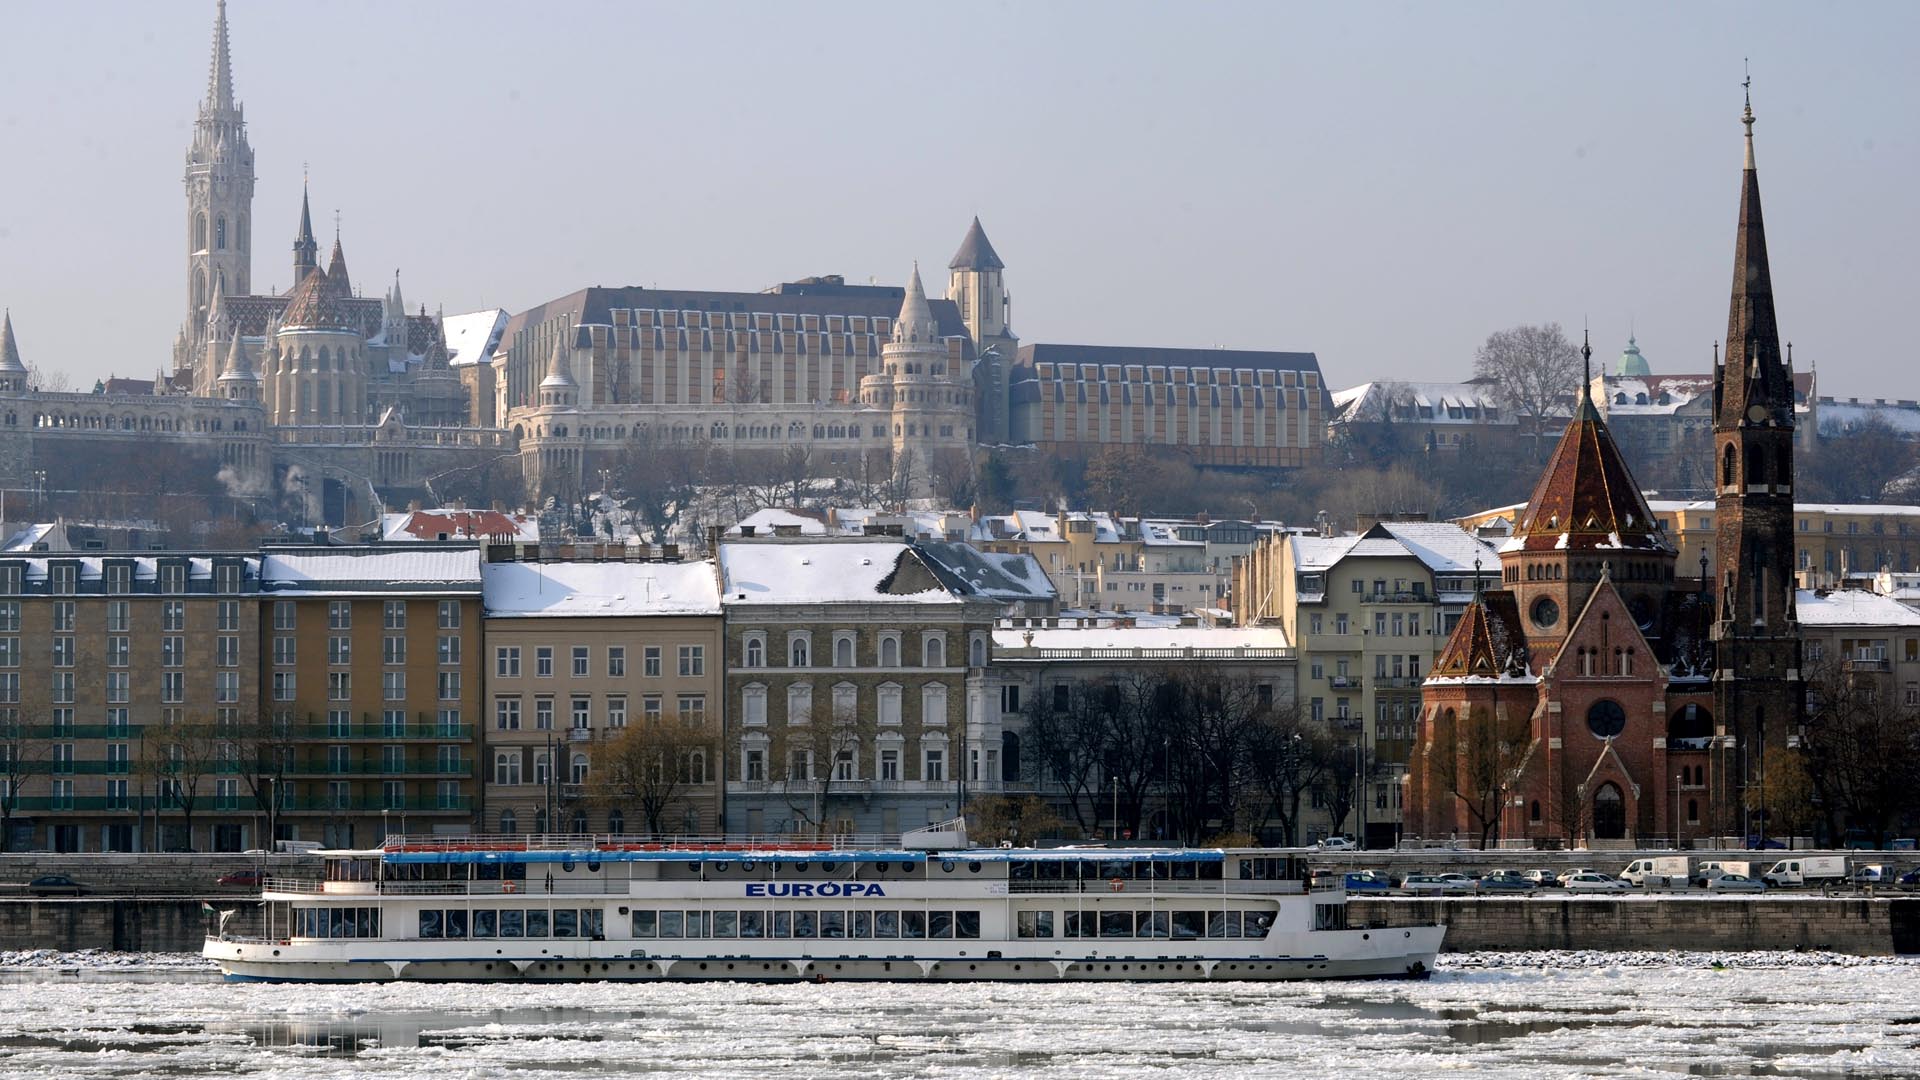 Winter Snow River Hungary Budapest Tower Cruise Ship Church Building Donau Ice Cityscape 1920x1080